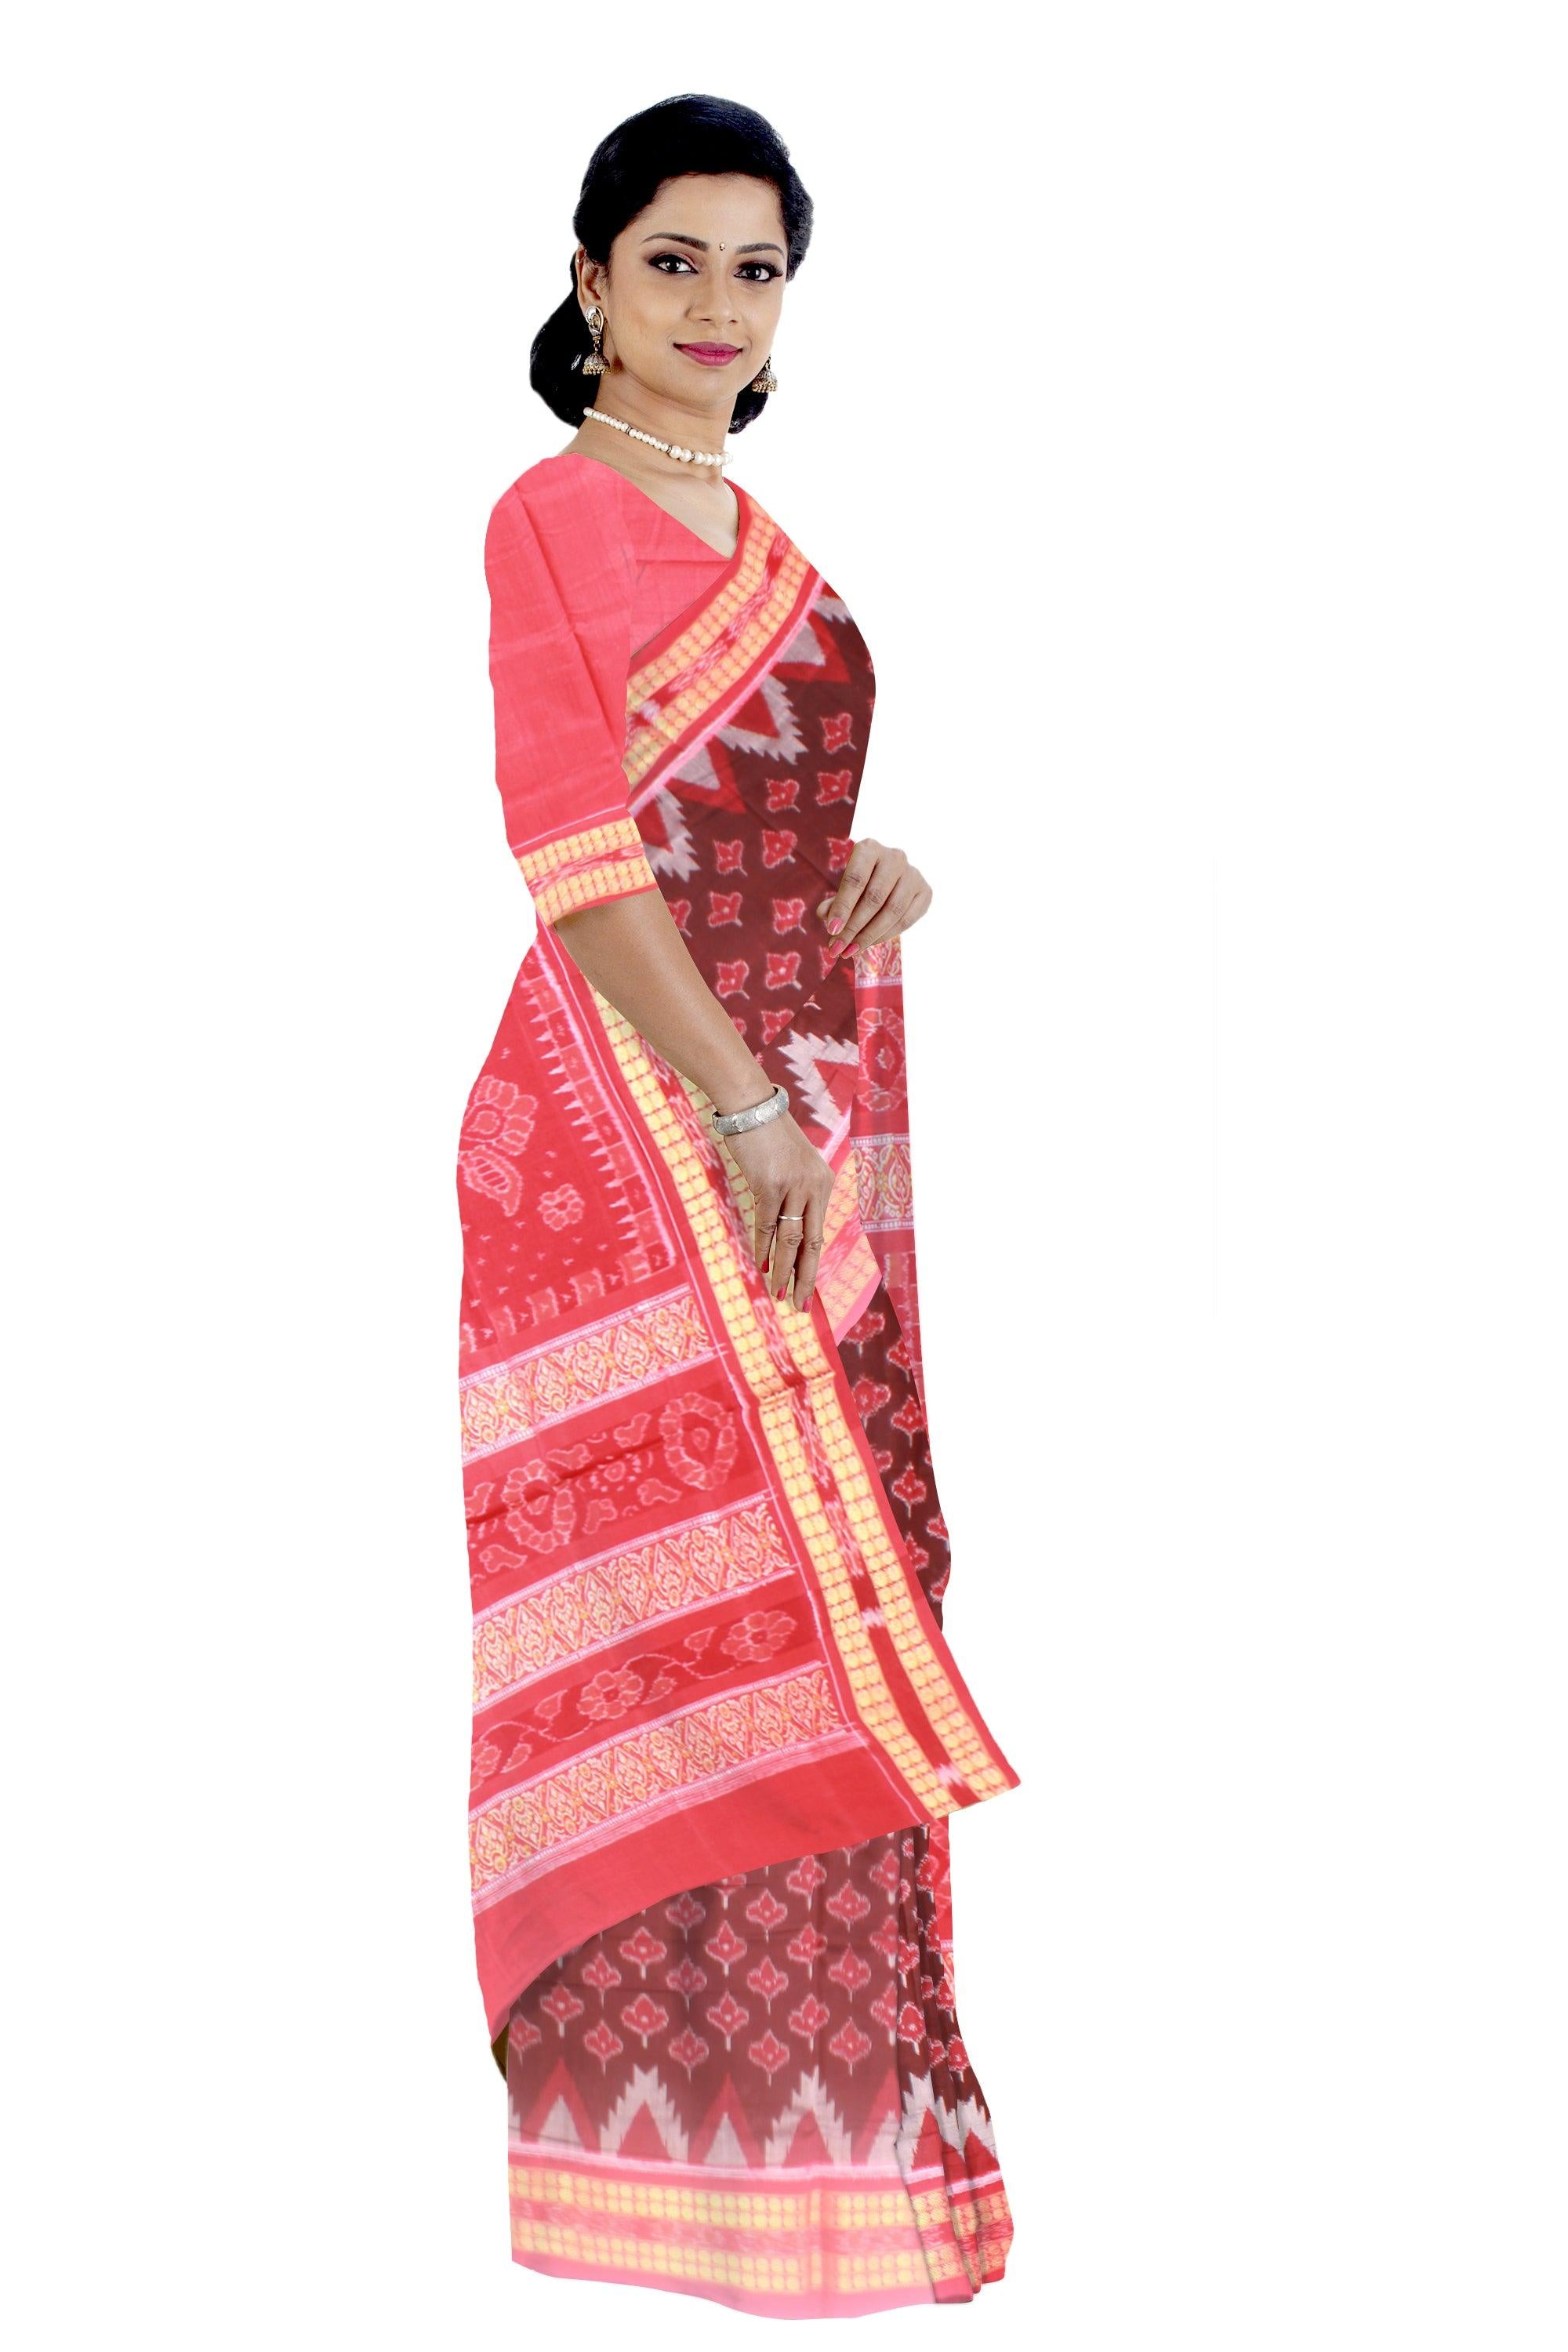 Sambalpuri Cotton Saree in Coffee Color in leaf design with Red Border with blouse piece. - Koshali Arts & Crafts Enterprise